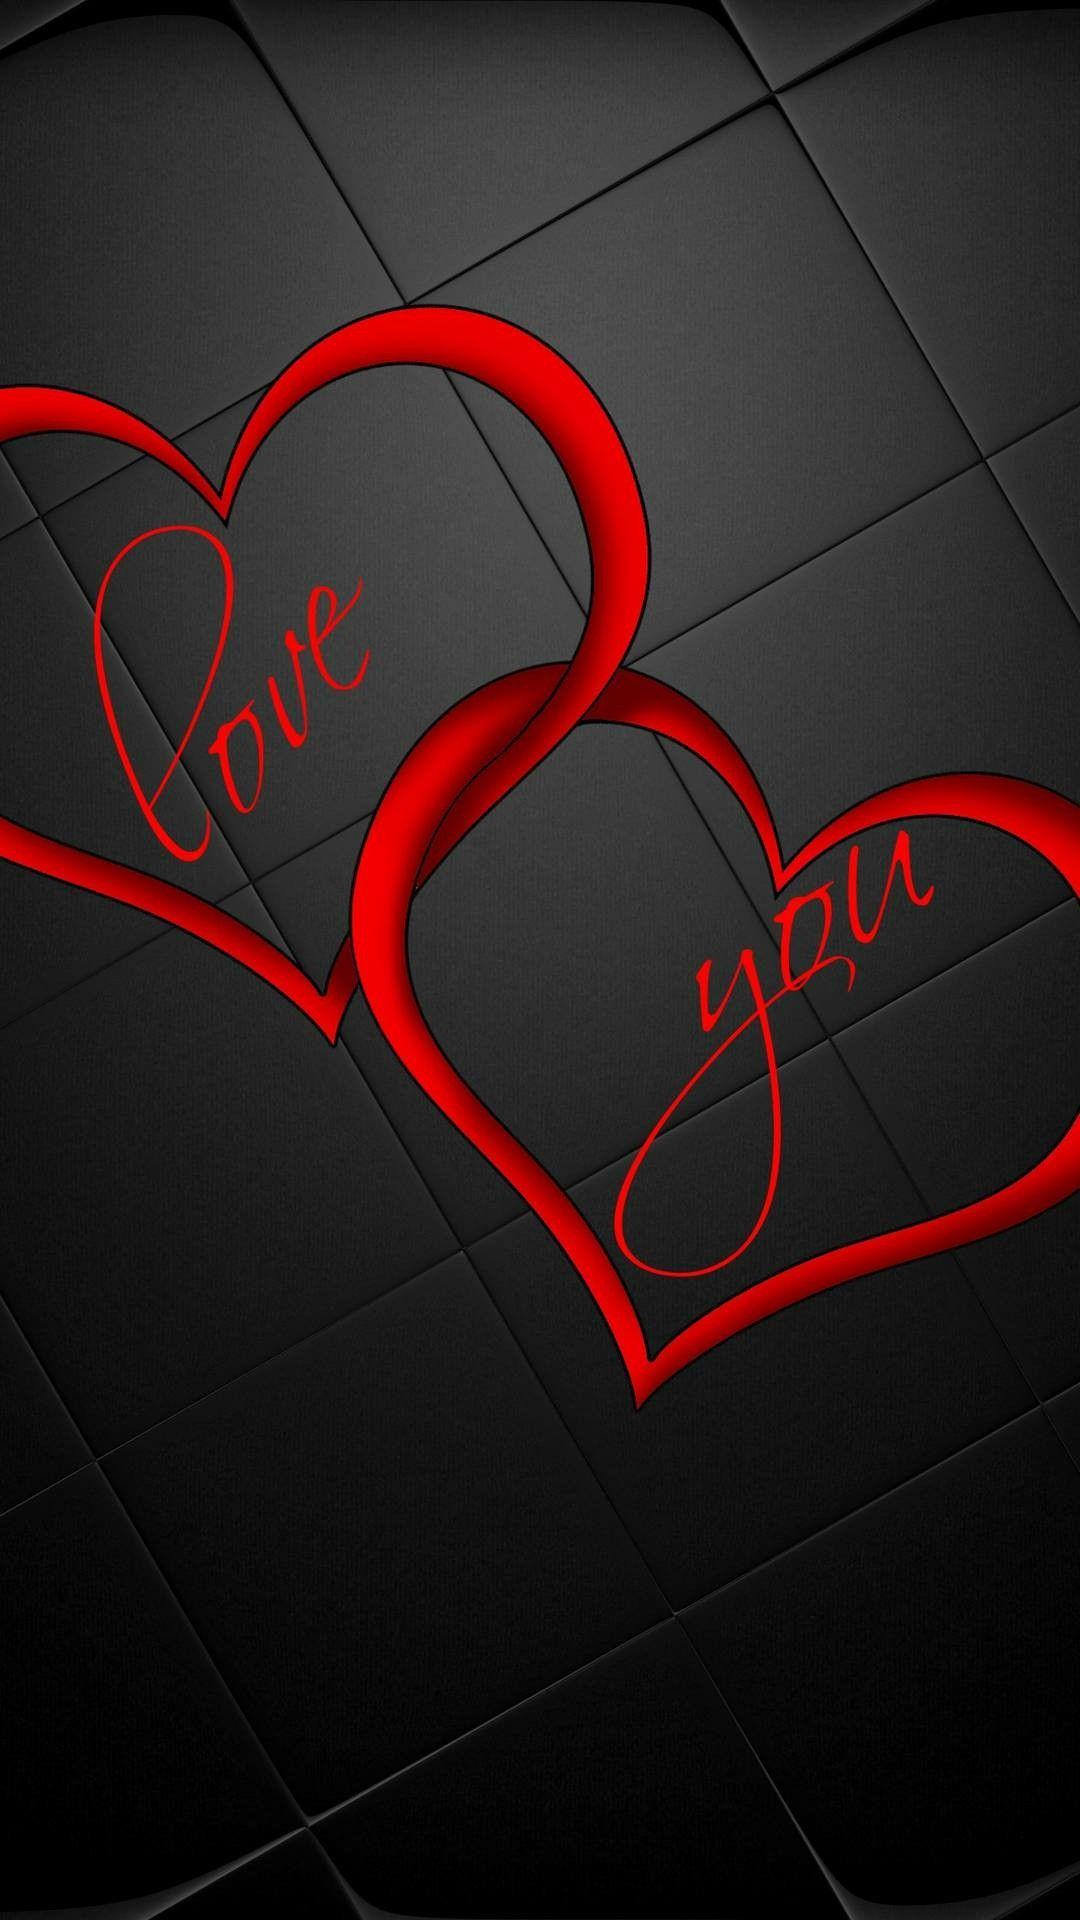 Love u hearts. Cellphone wallpaper, Heart wallpaper, Happy